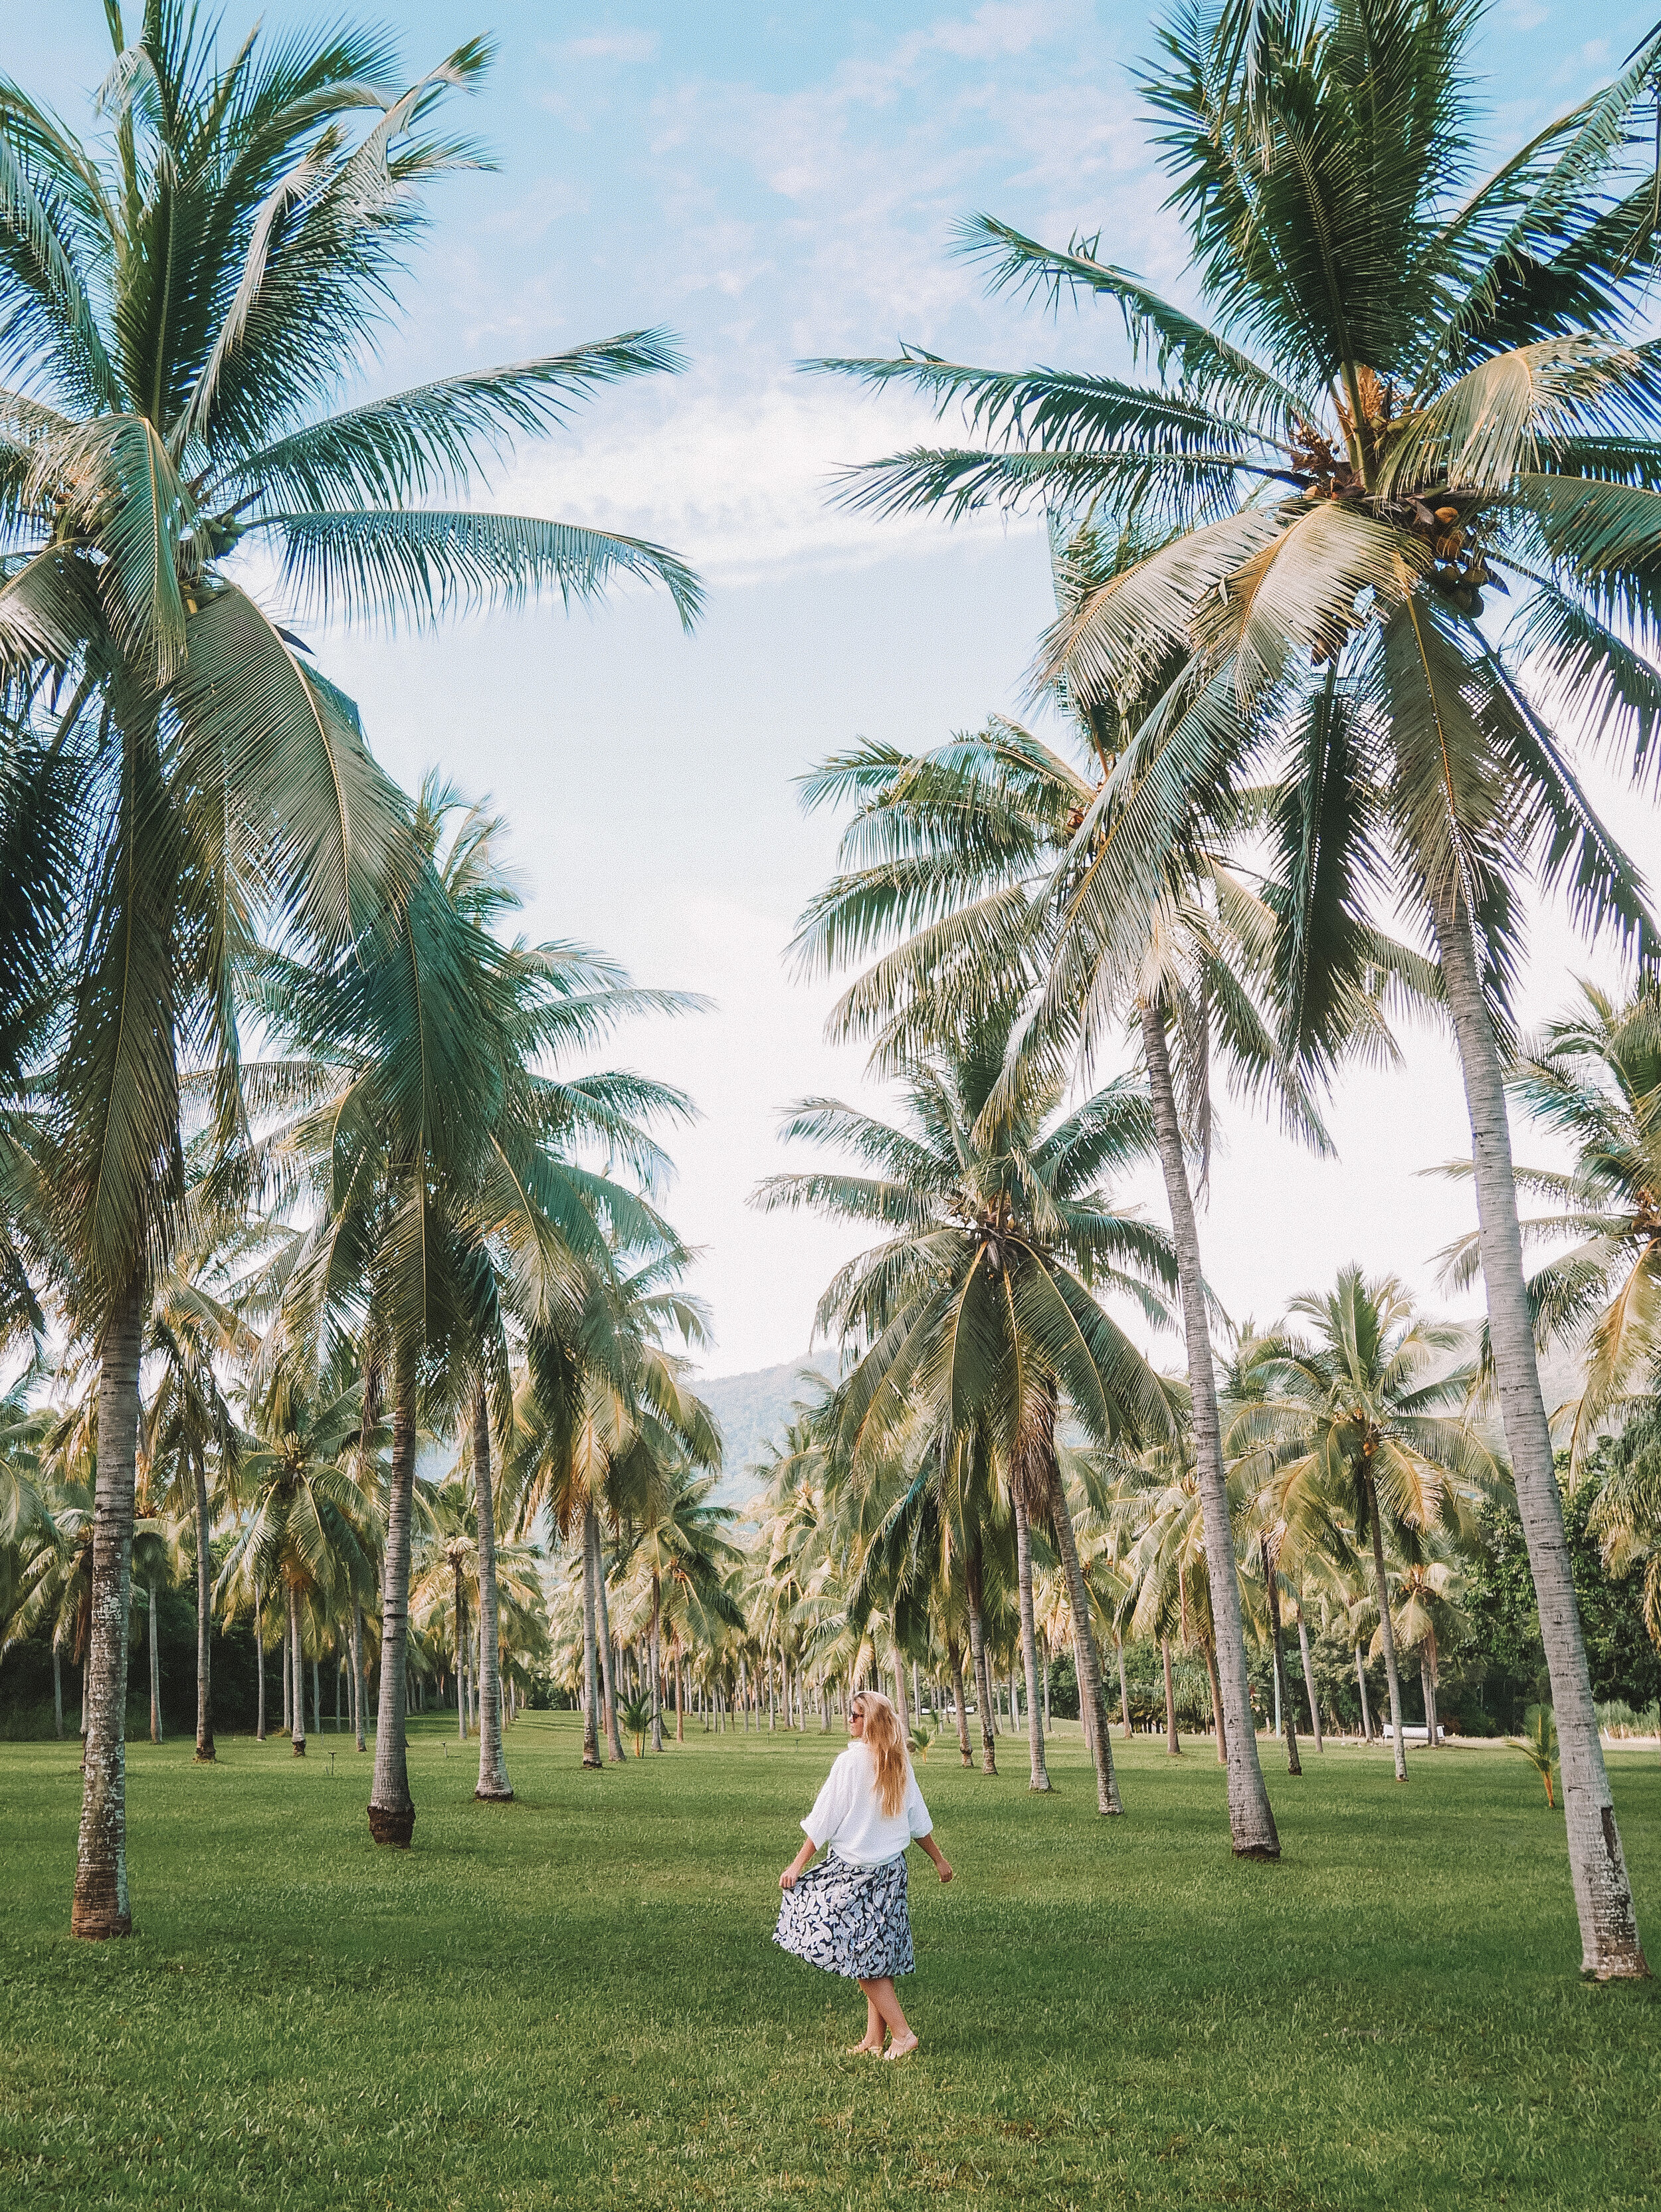 Walking around the palm tree plantation - Thala Beach Reserve - Tropical North Queensland (QLD) - Australia